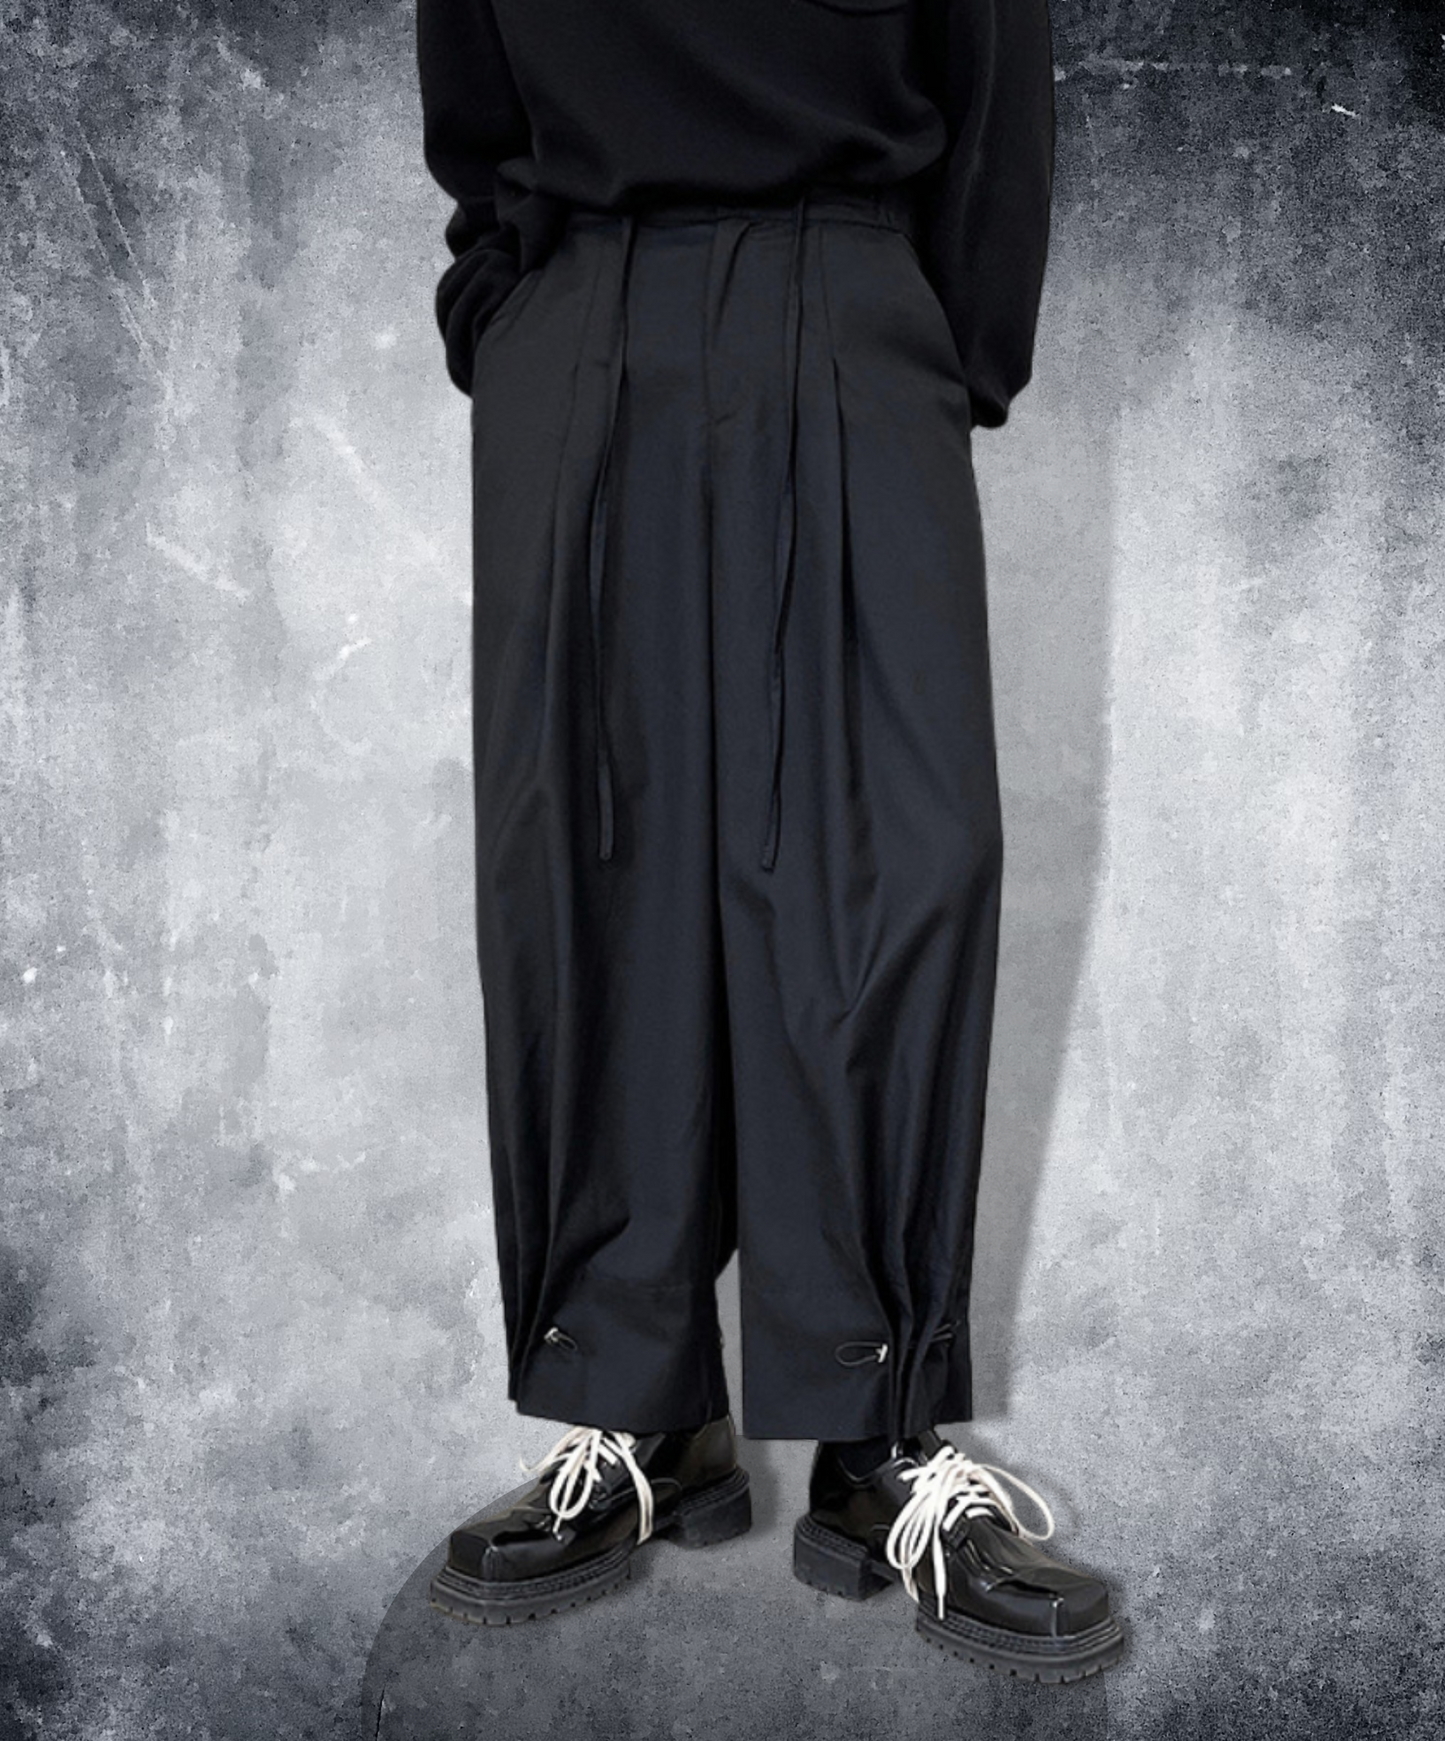 【style12】dark mode outfit set EN893（t-shirt + pants set）